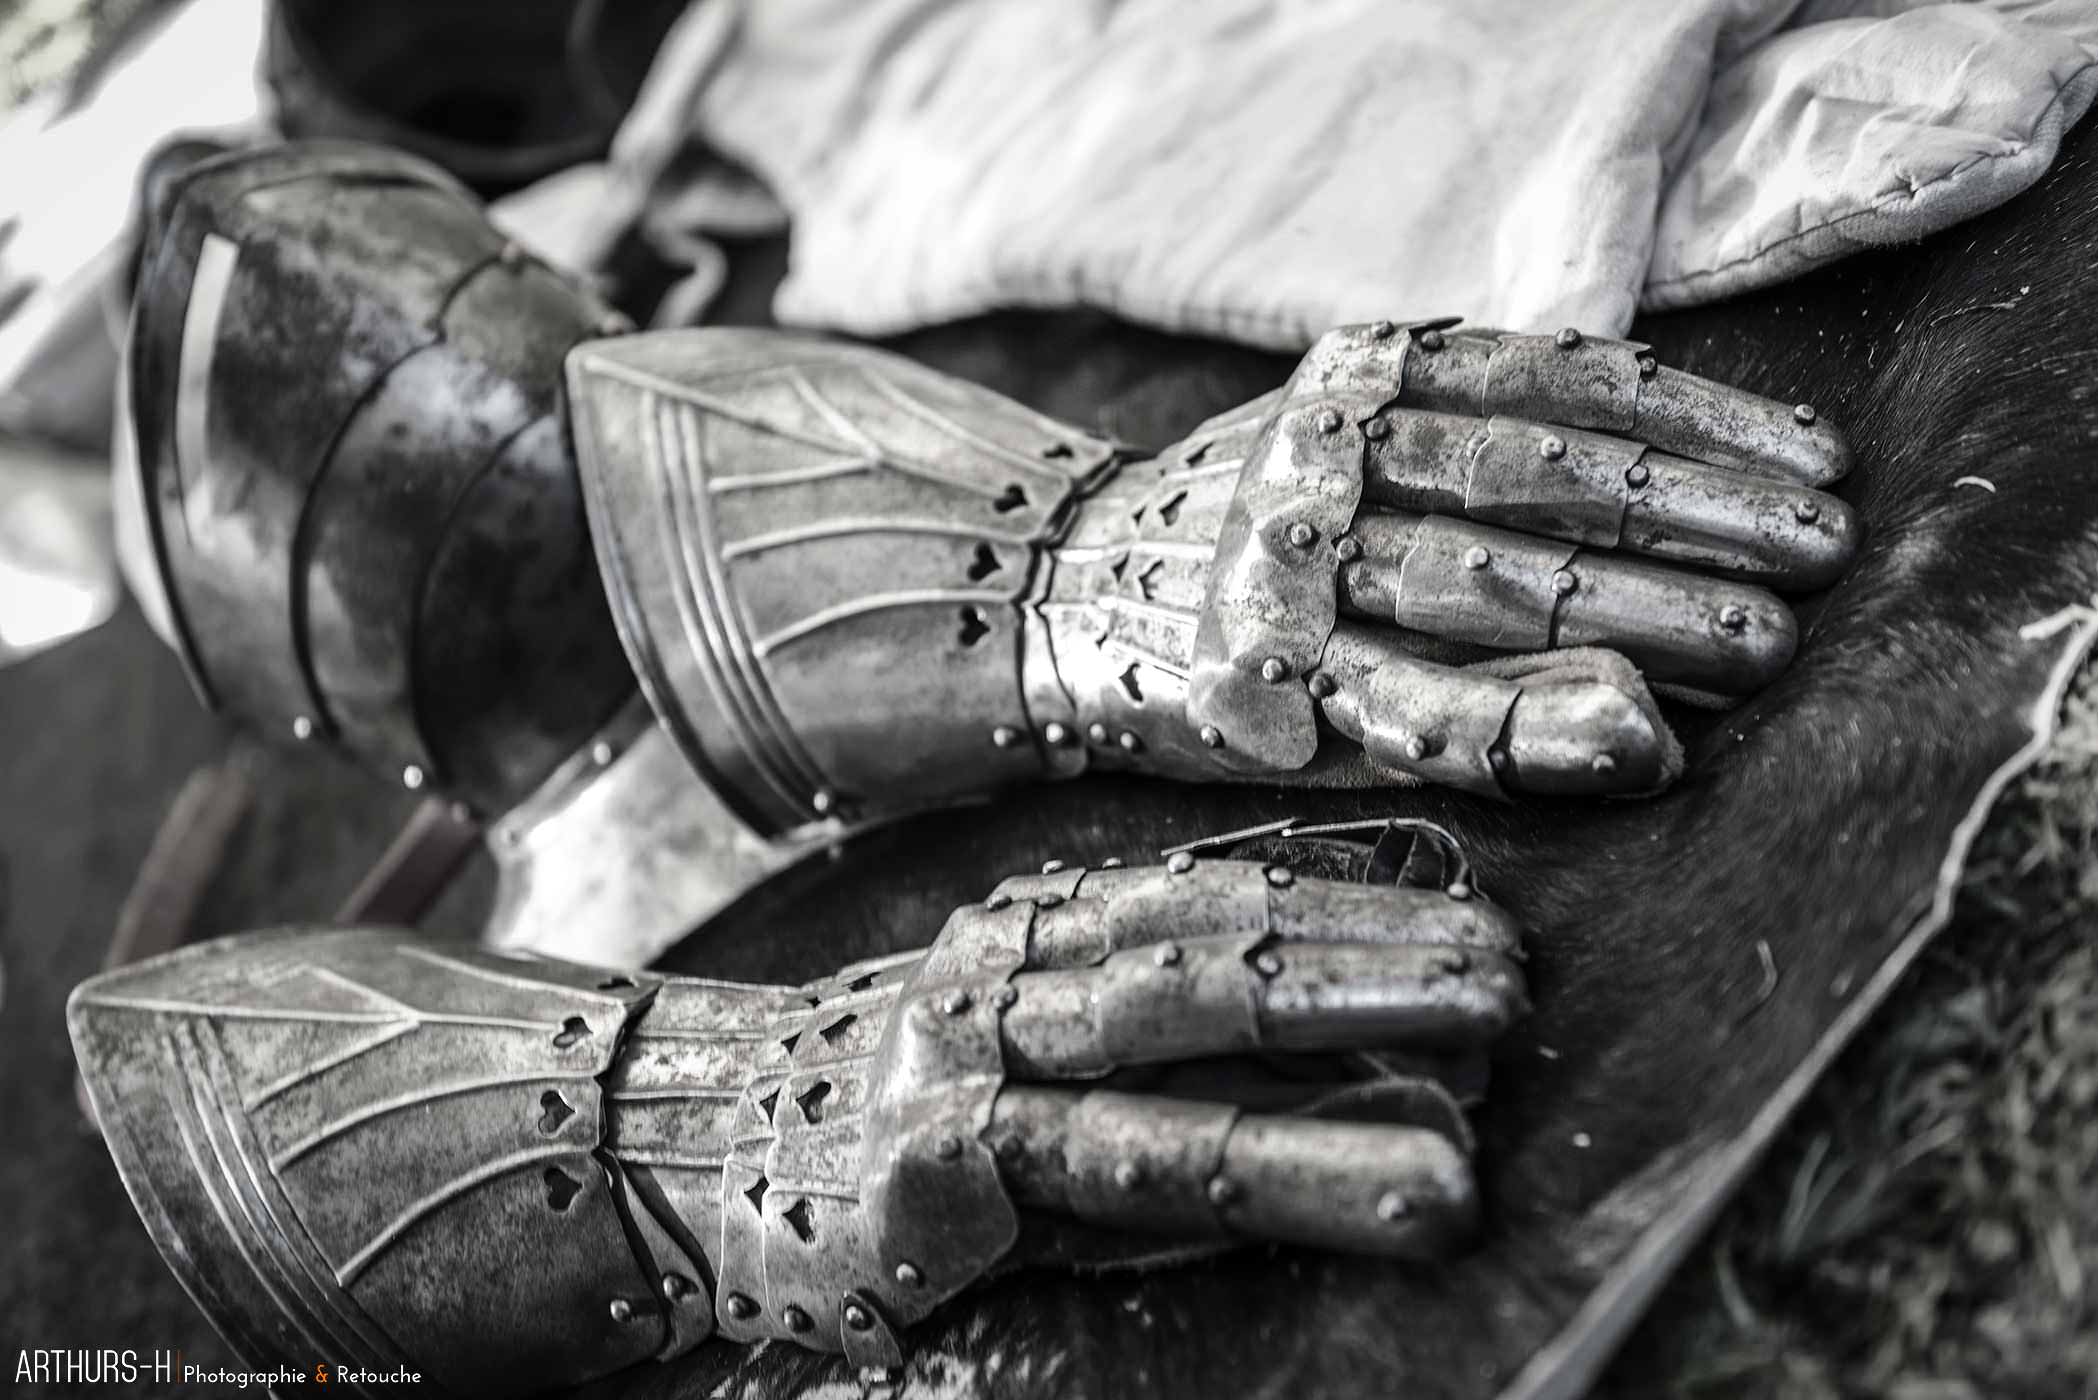 photographe reportage : armure médiéval